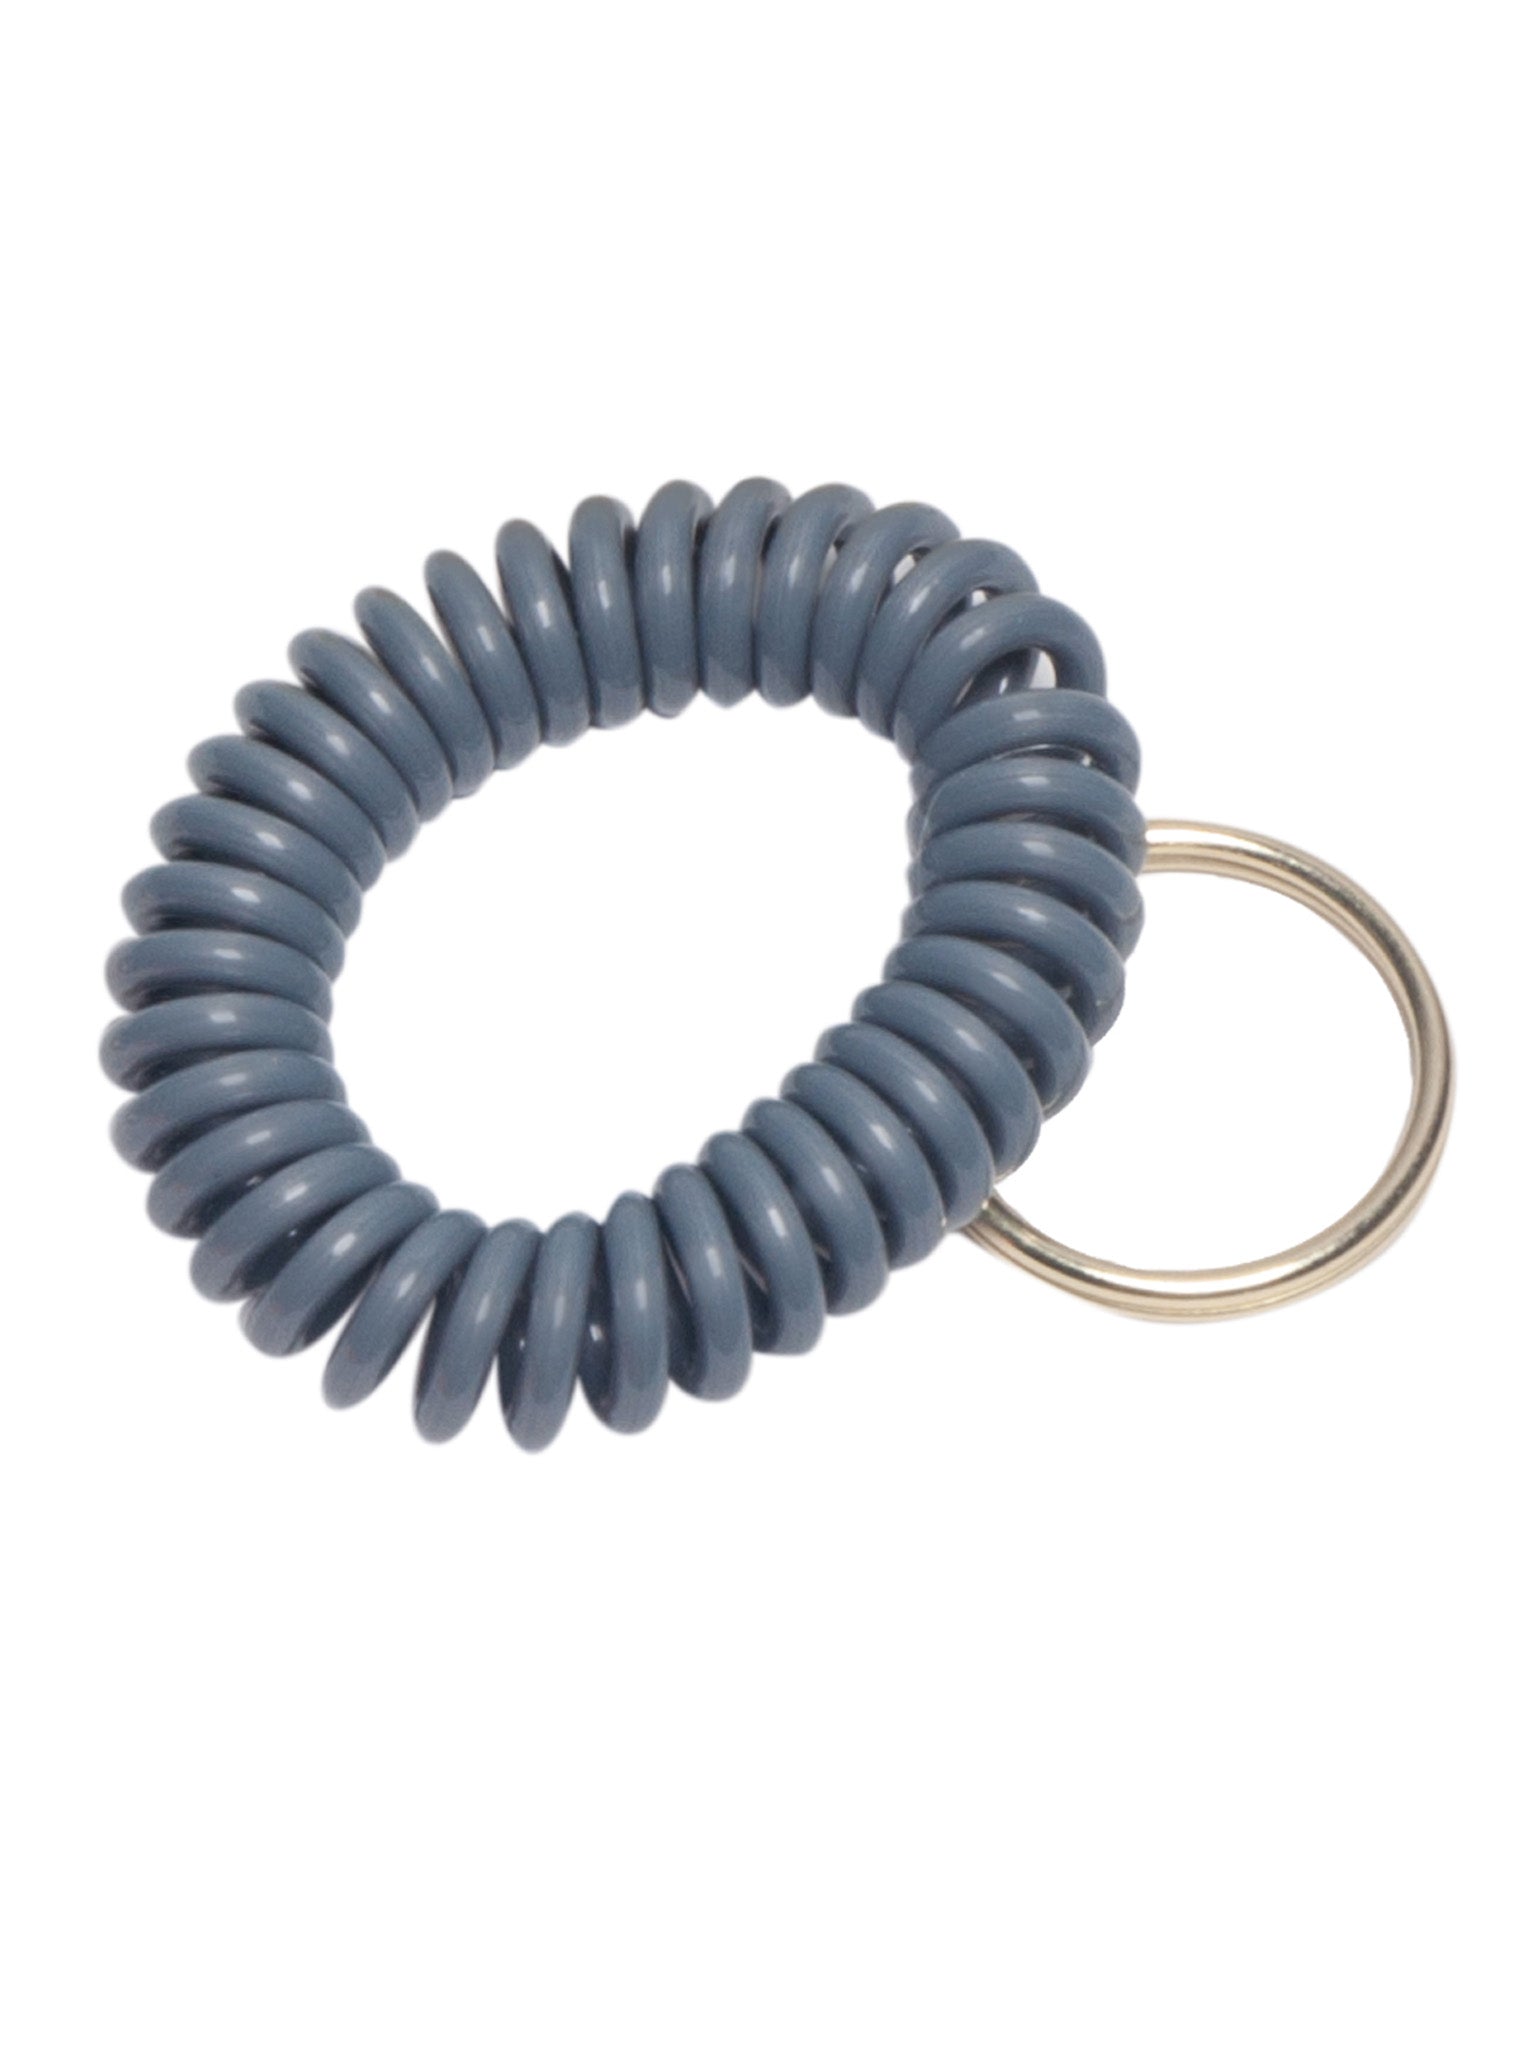 Spiral Bracelets For Whistle